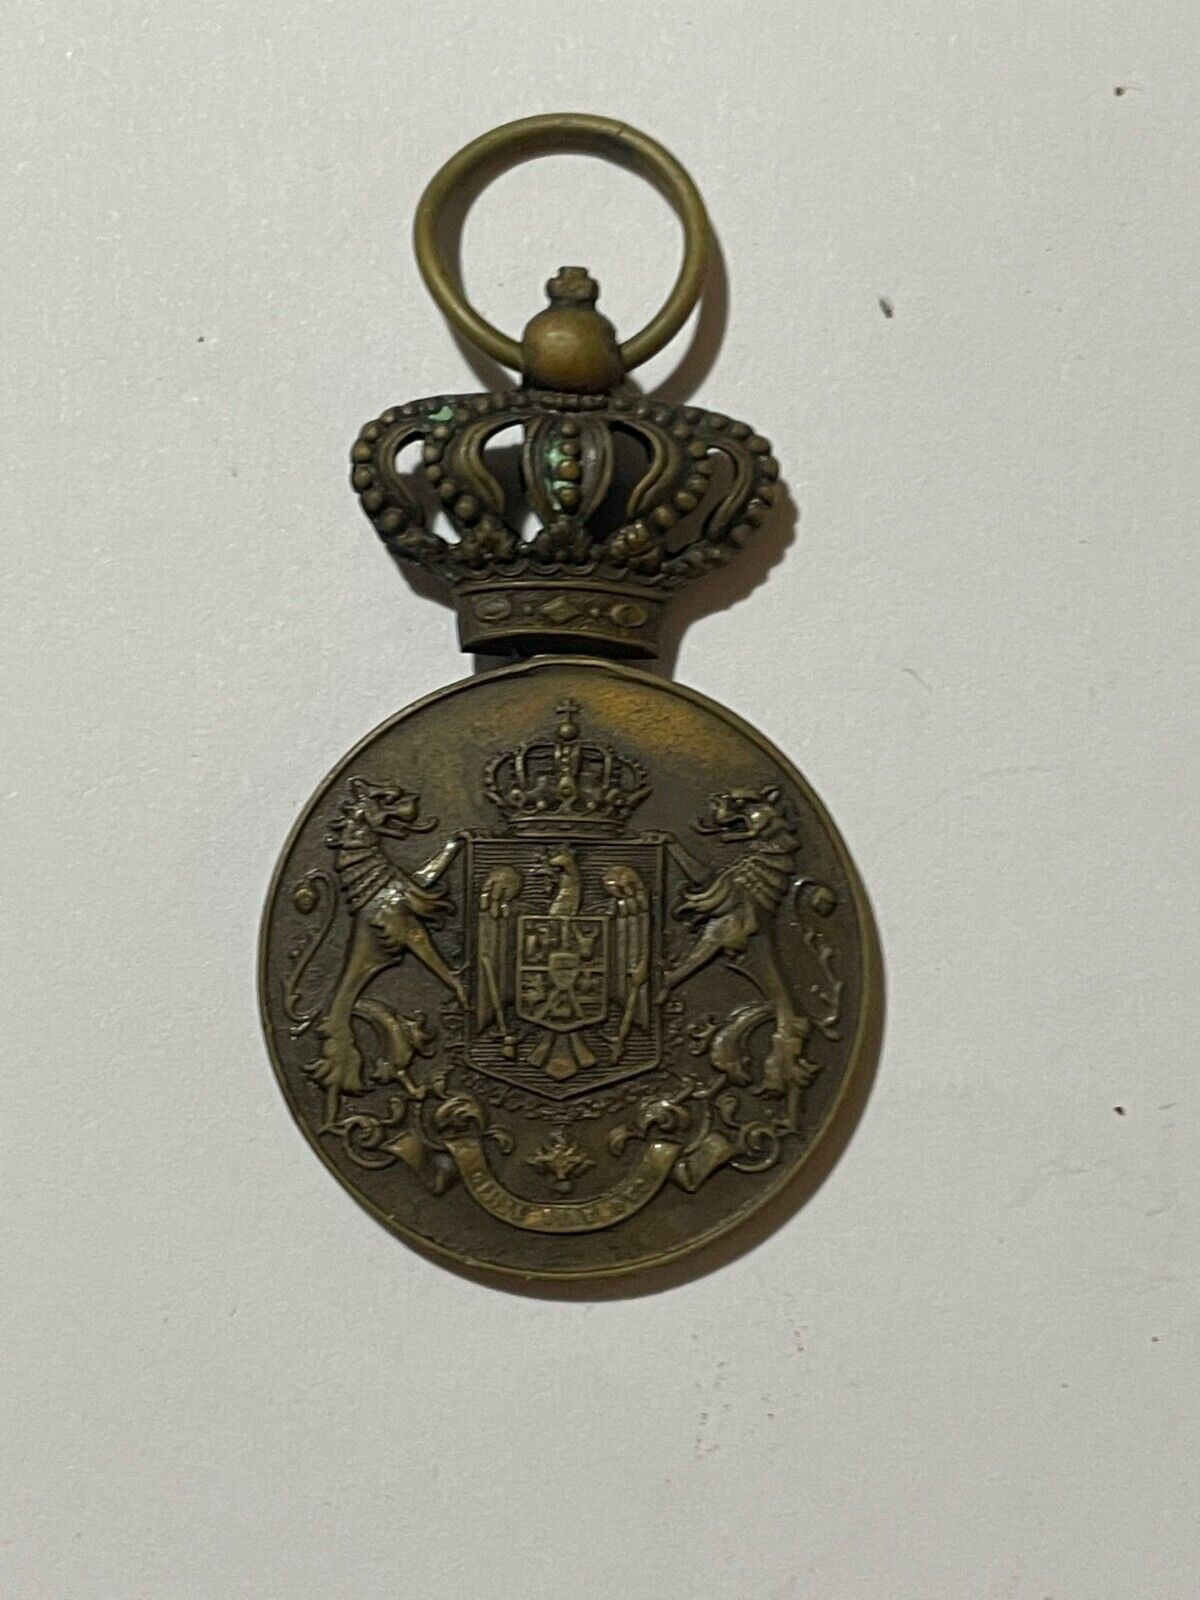 ROMANIA WW1 LOYAL SERVICE 3rd class medal 1st type 1880-1921 KING CAROL I MEDAL